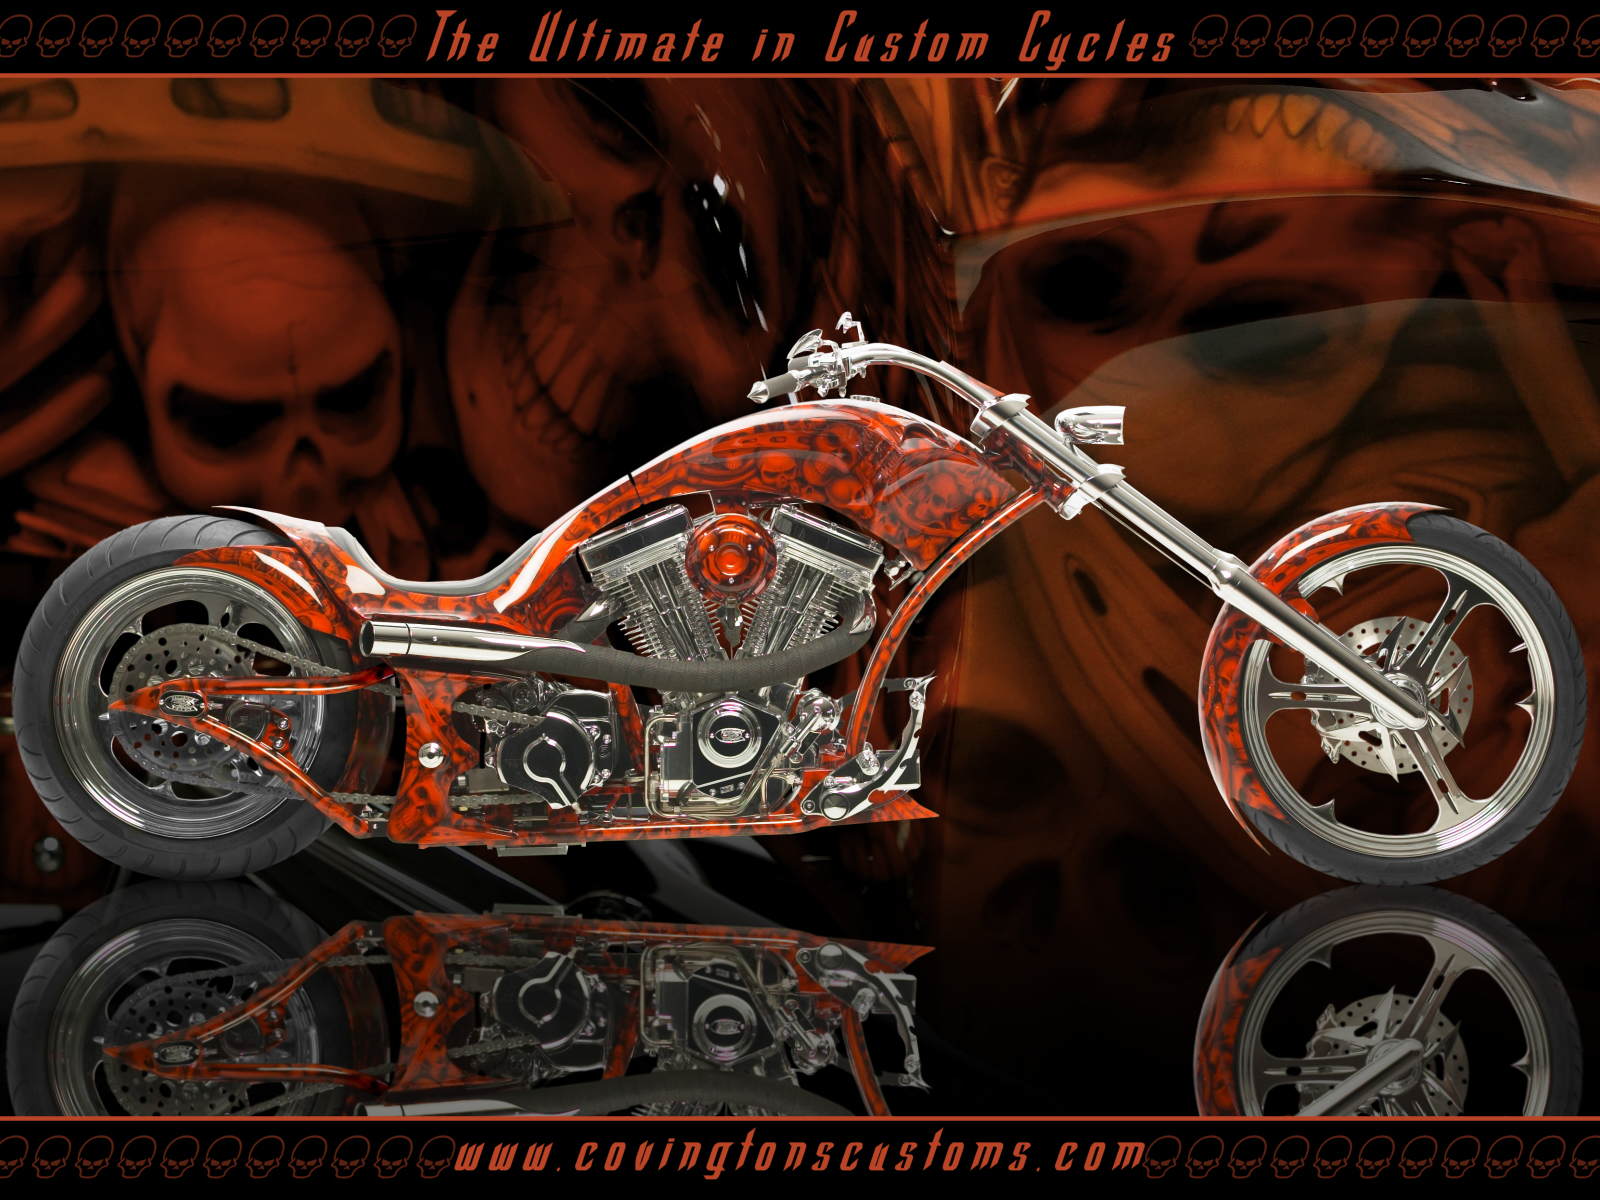 Covingtons Custom Motorcycle WallPaper 16jpg